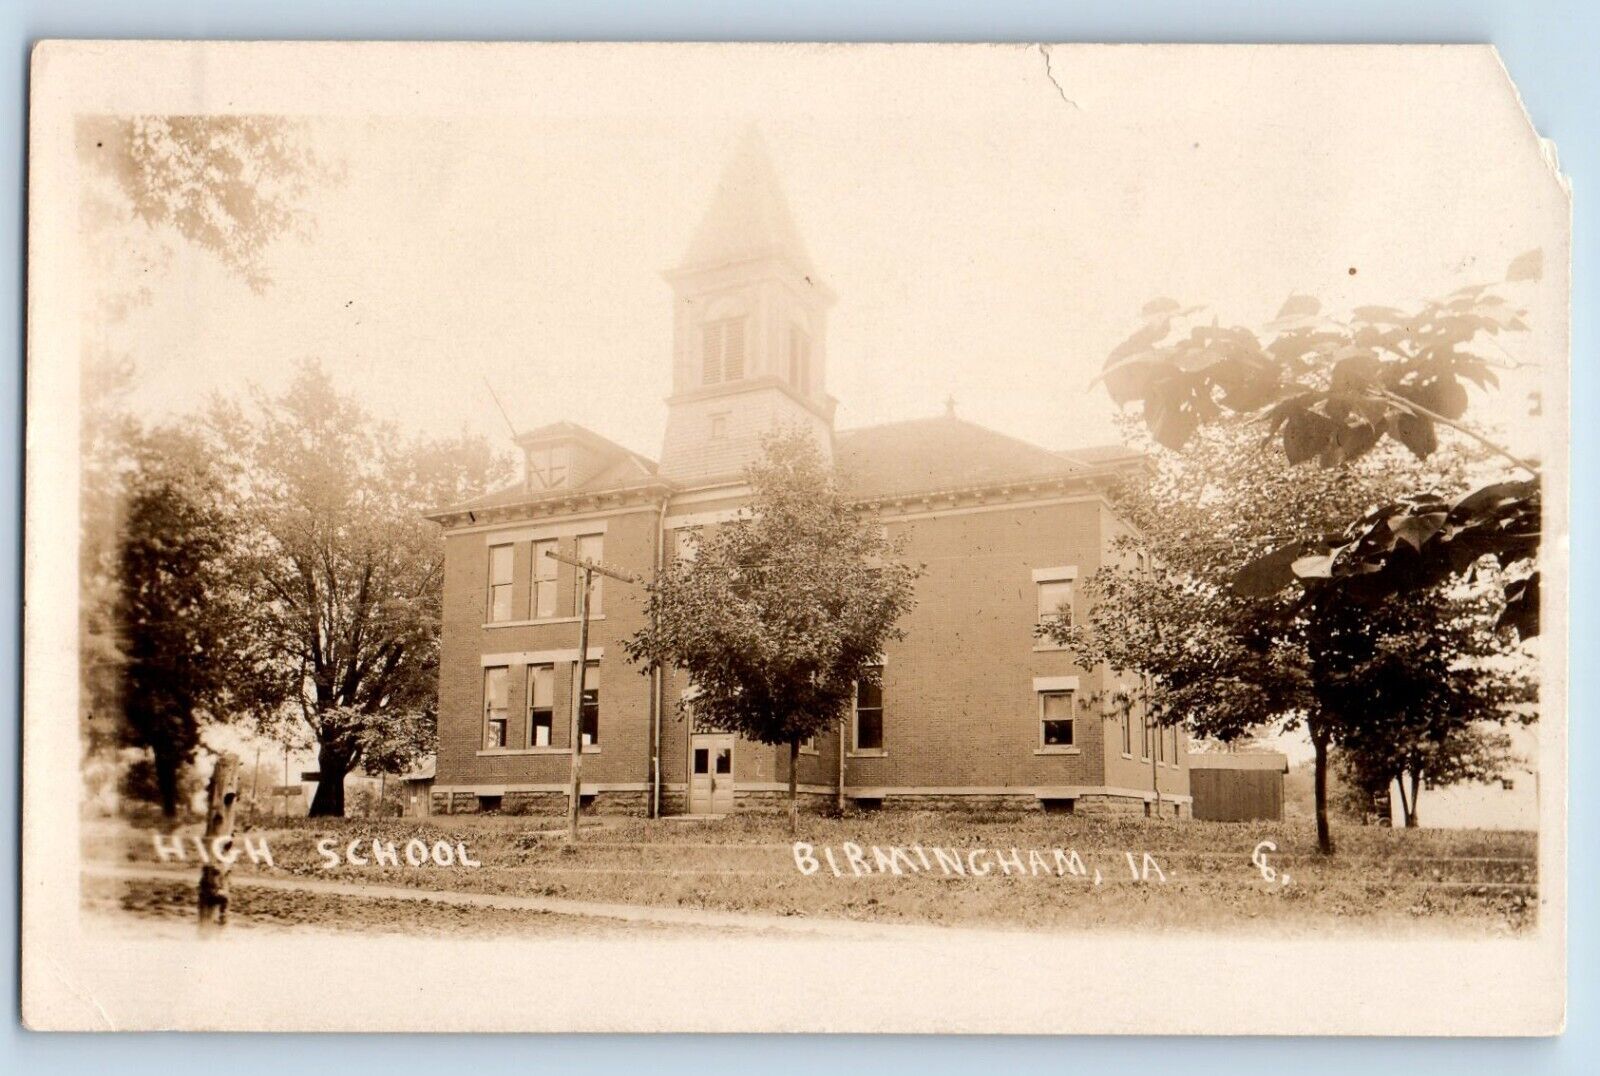 Birmingham Iowa IA Postcard RPPC Photo High School Building c1910's Antique